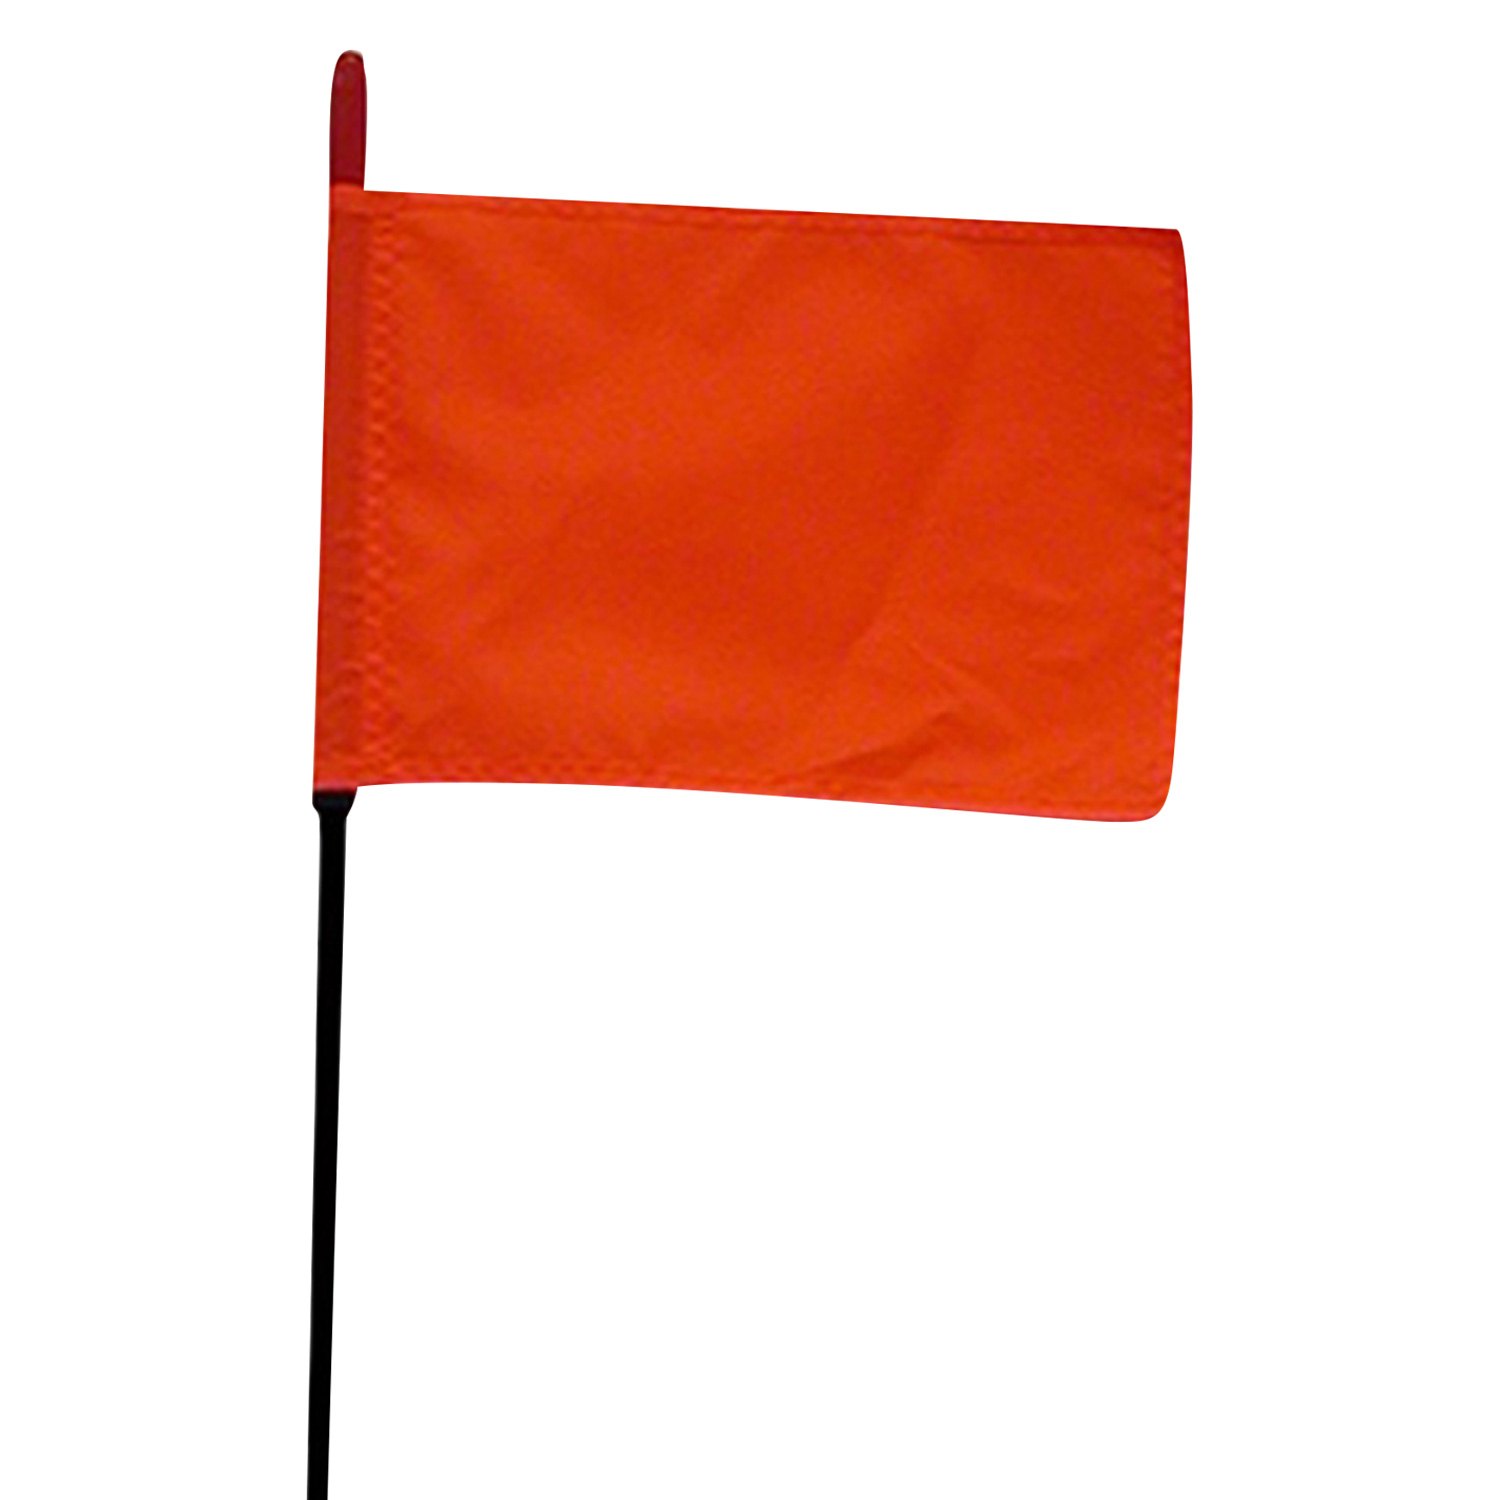 FireStik® - Fire Stick with Orange Safety Flag - TOOLSiD.com